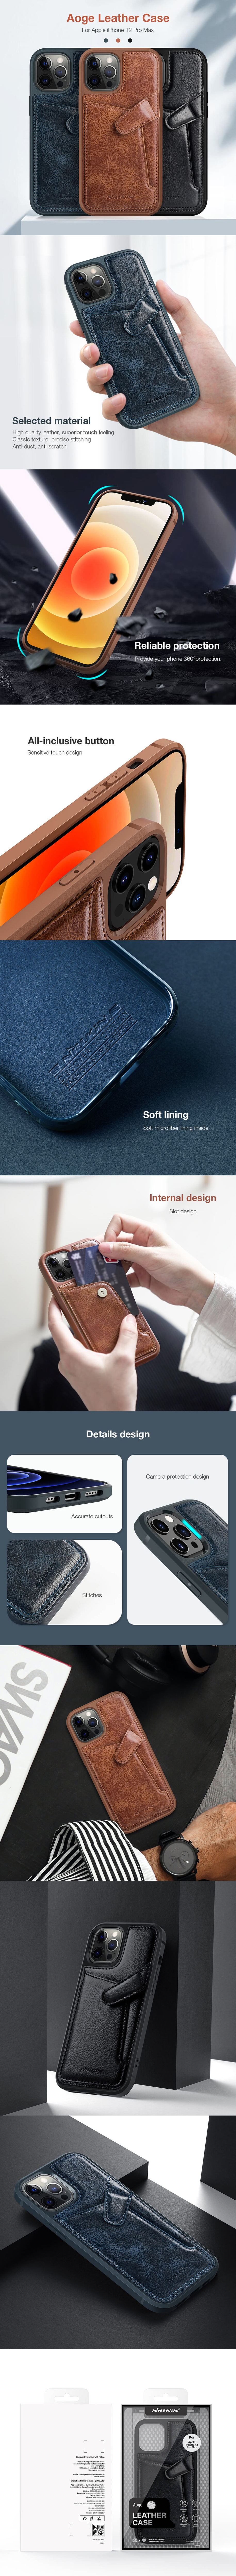 کاور اورجینال نیلکین مدل Aoge Leather Case مناسب برای گوشی موبایل آیفون 12 پرو مکس